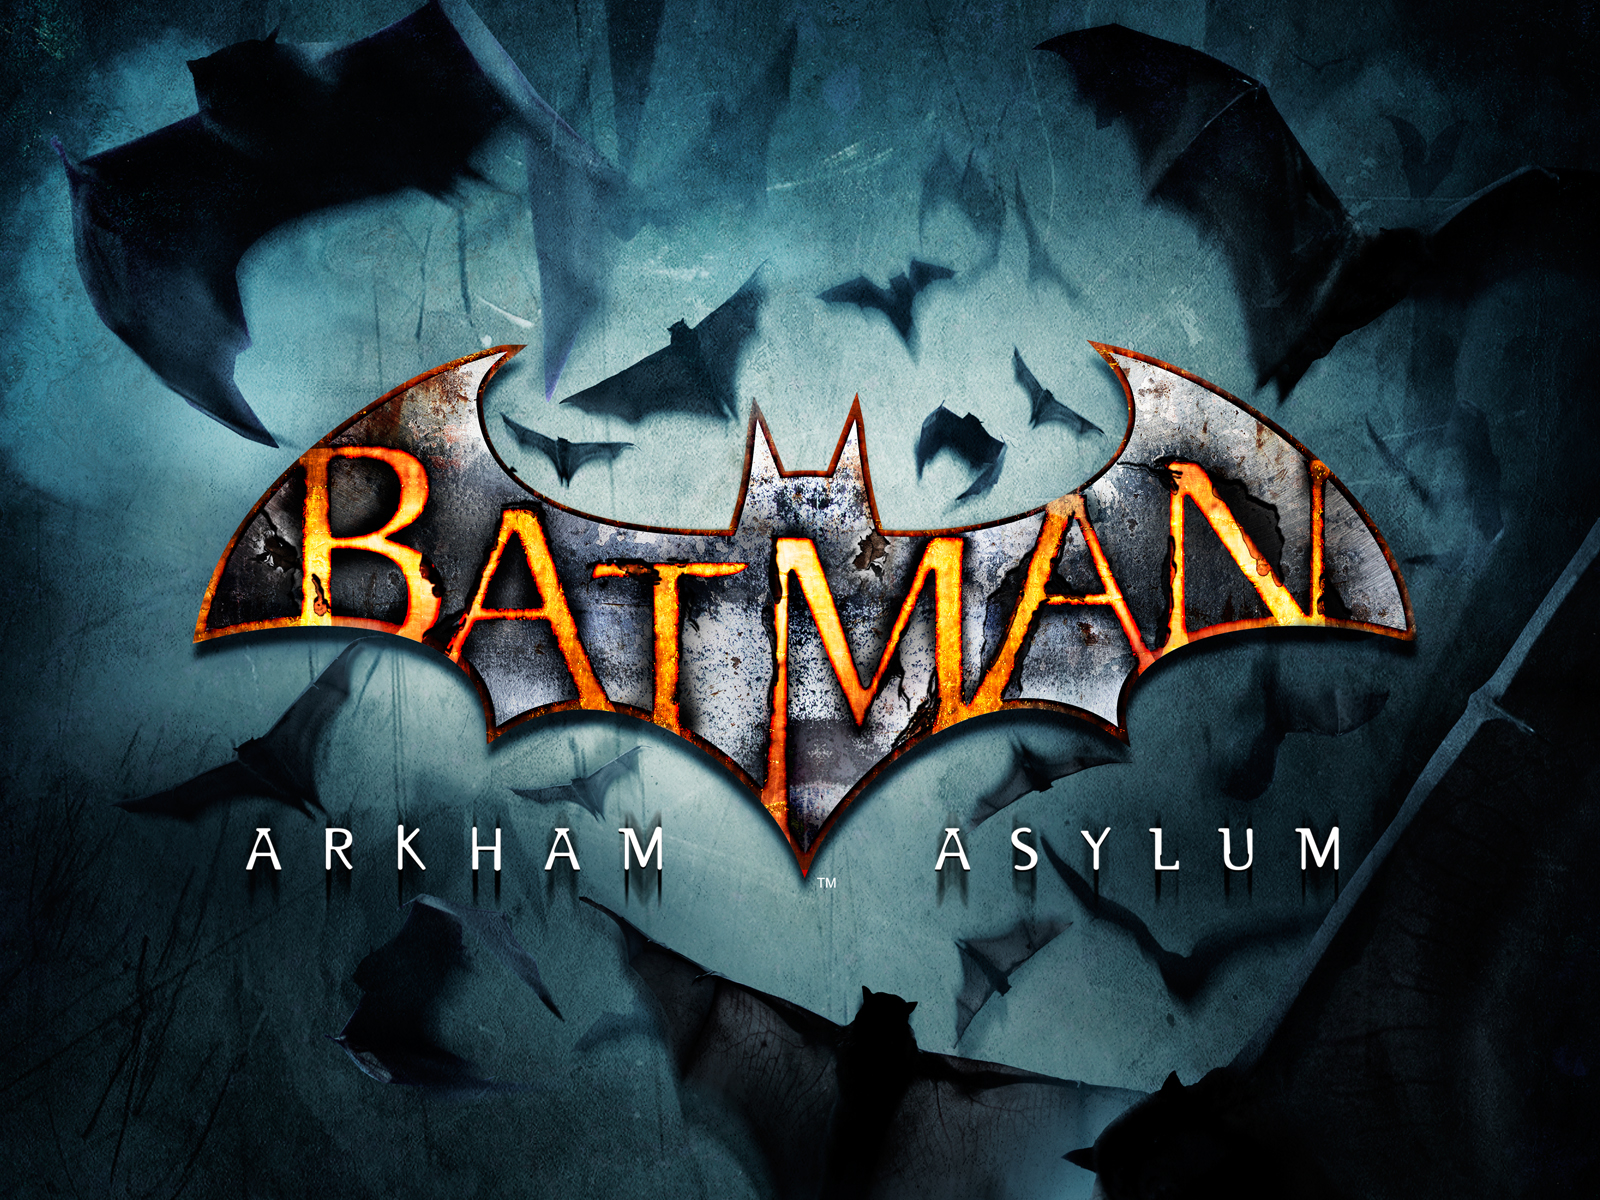 https://uselesswarrior.files.wordpress.com/2010/05/batman-arkham-asylum-logo-wallpaper.jpg